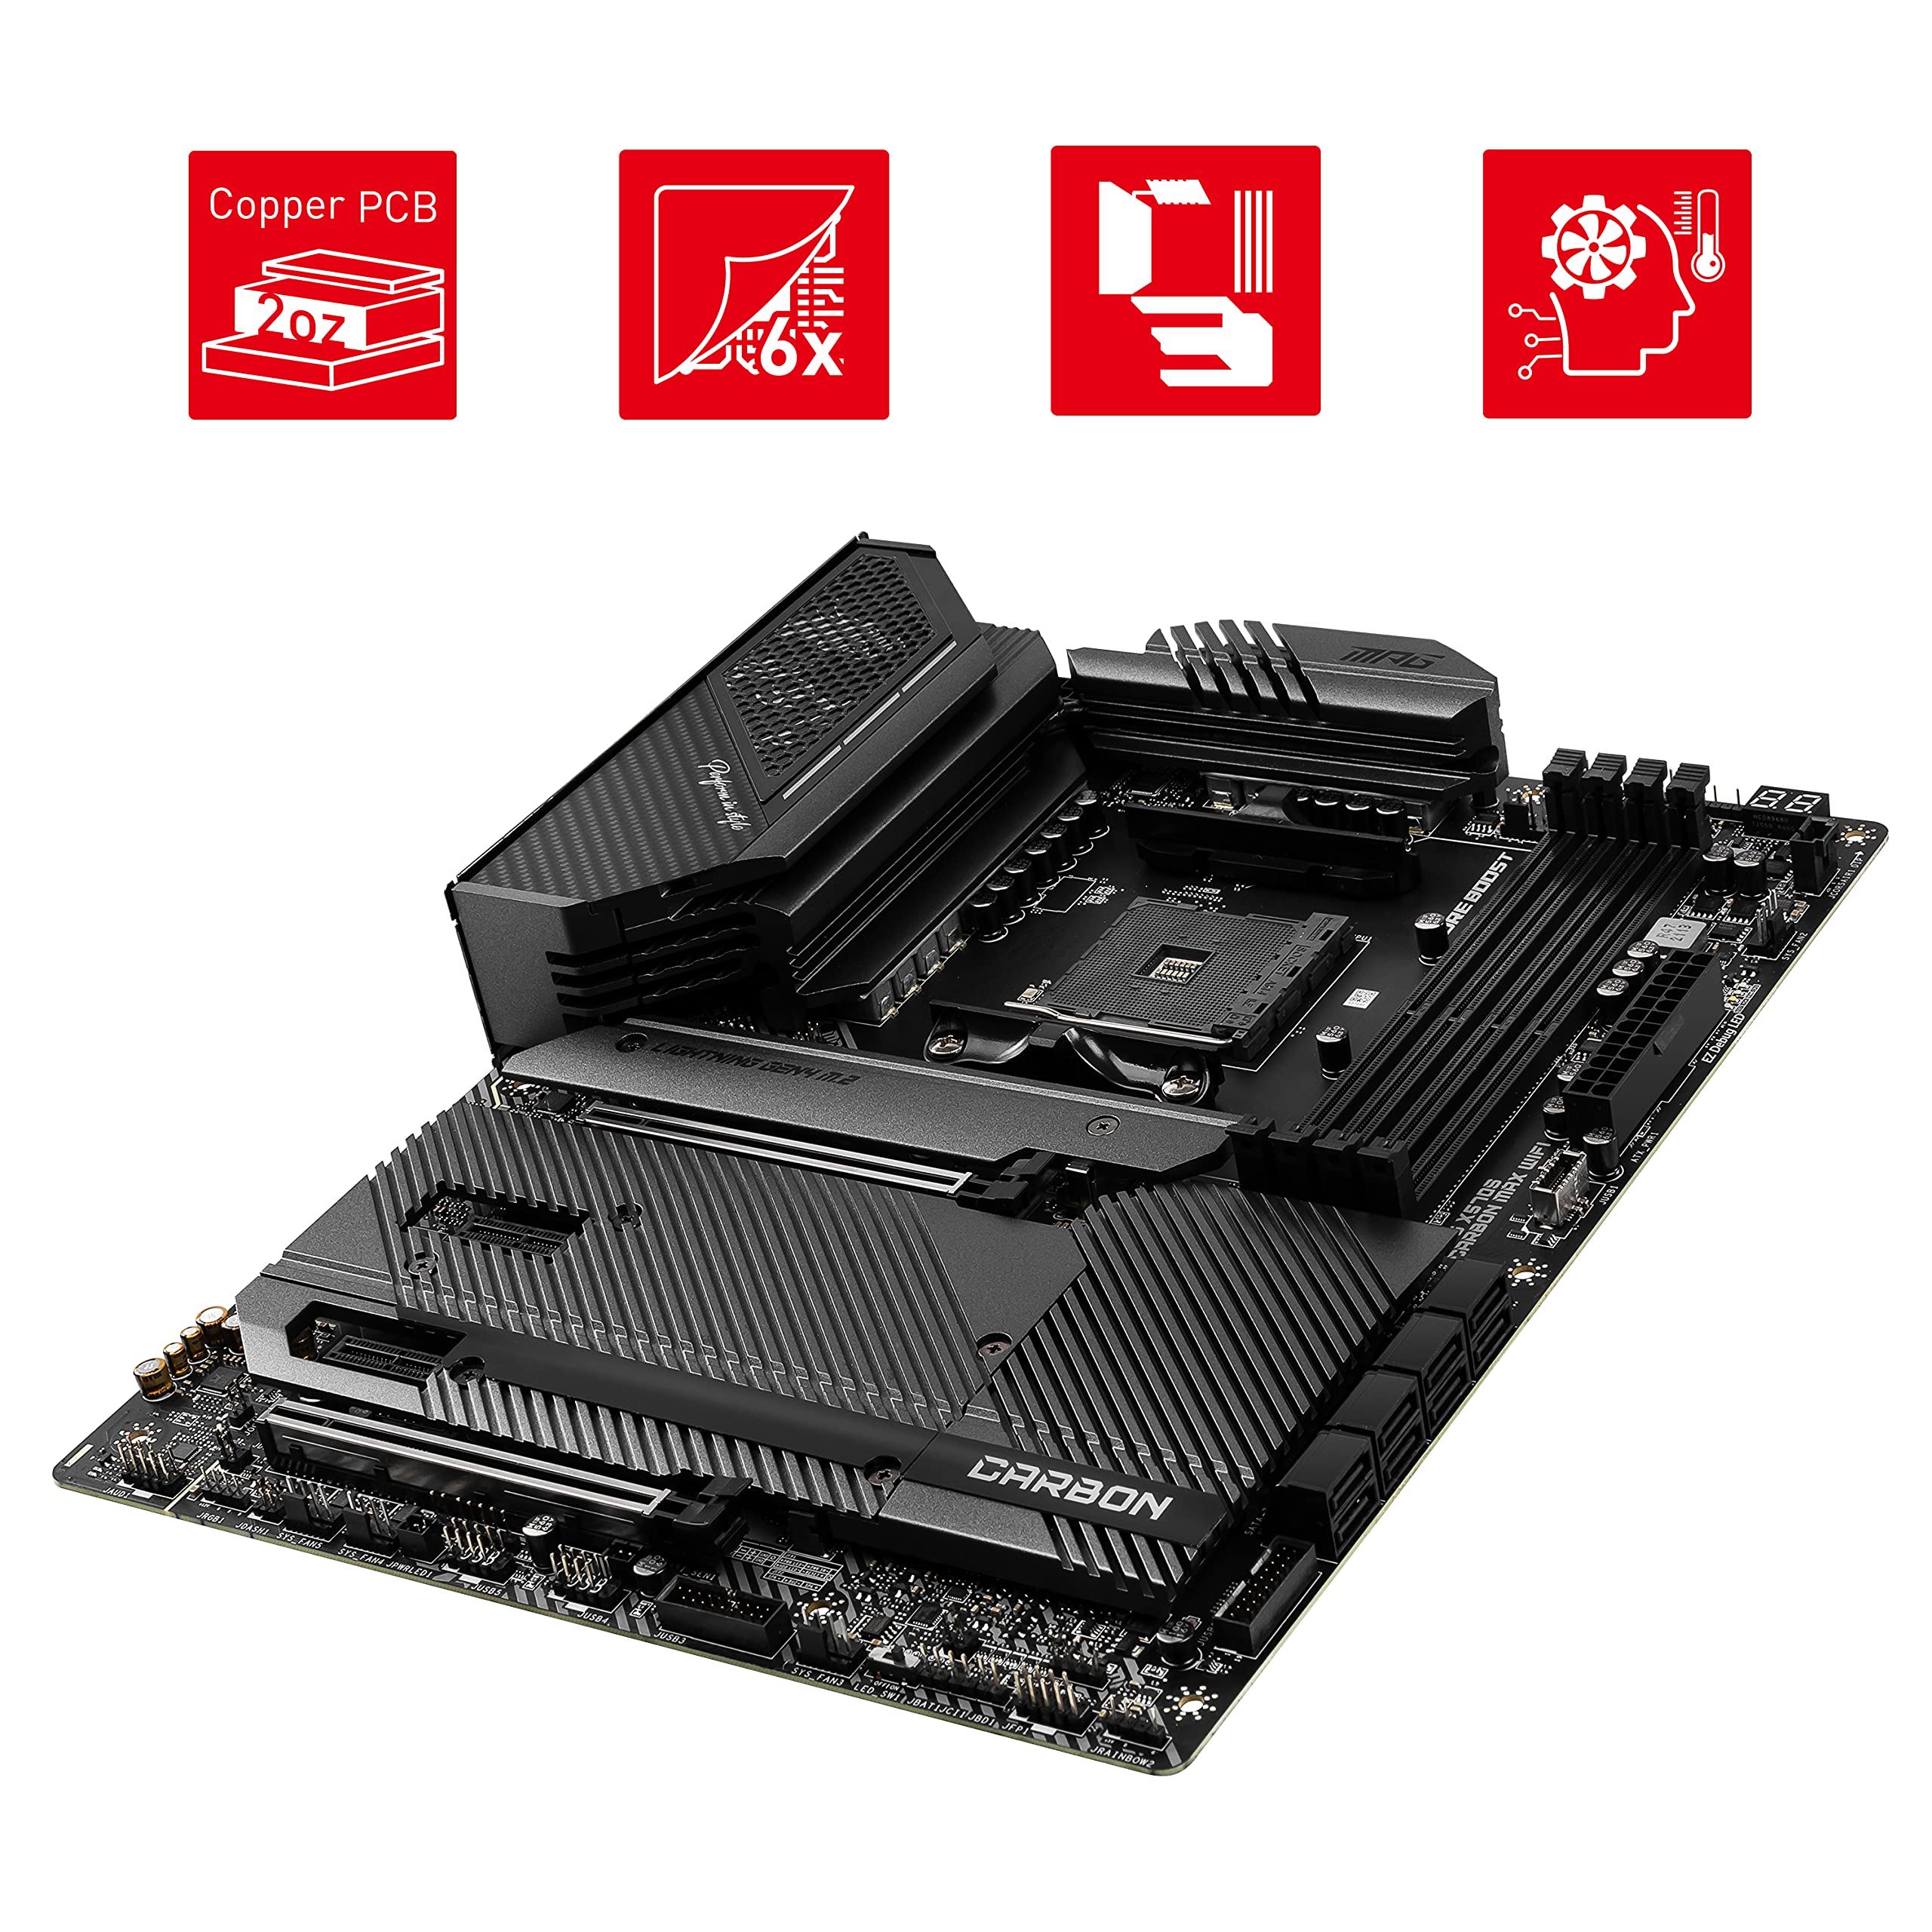 MSI MPG X570S CARBON MAX WIFI Motherboard ATX - Supports AMD Ryzen 5000 Series Processors, AM4 - Mystic Light, DDR4 Boost (5300MHz/OC), 2 x PCIe 4.0 x16, 4 x M.2 Gen4 x4, 2.5G LAN, Wi-Fi 6E